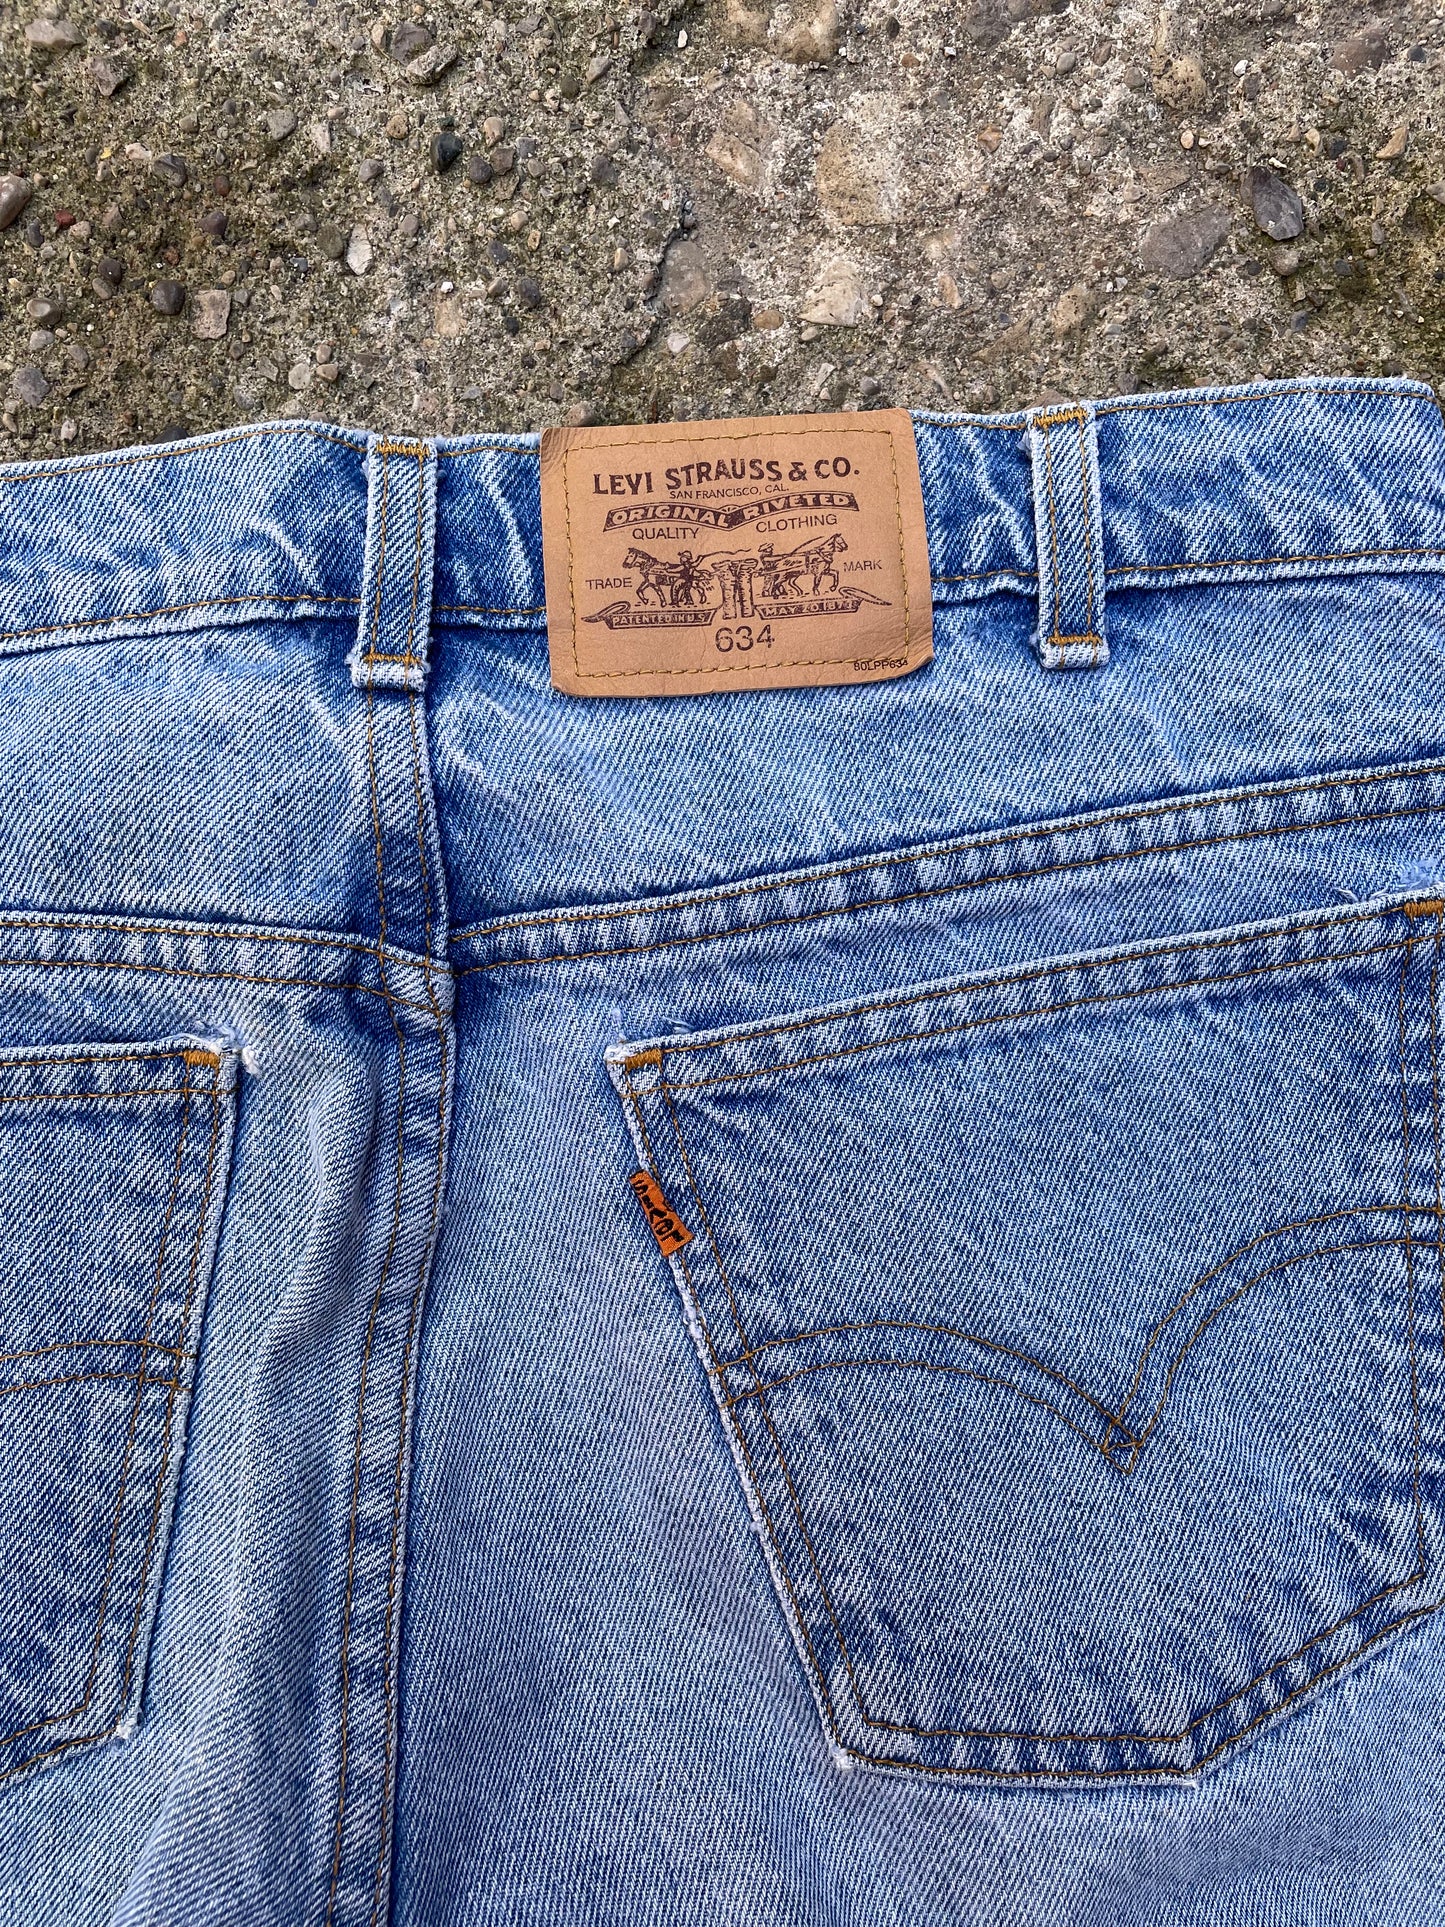 1990's Levi's 634 Orange Tab Light Wash Denim Jeans - 34